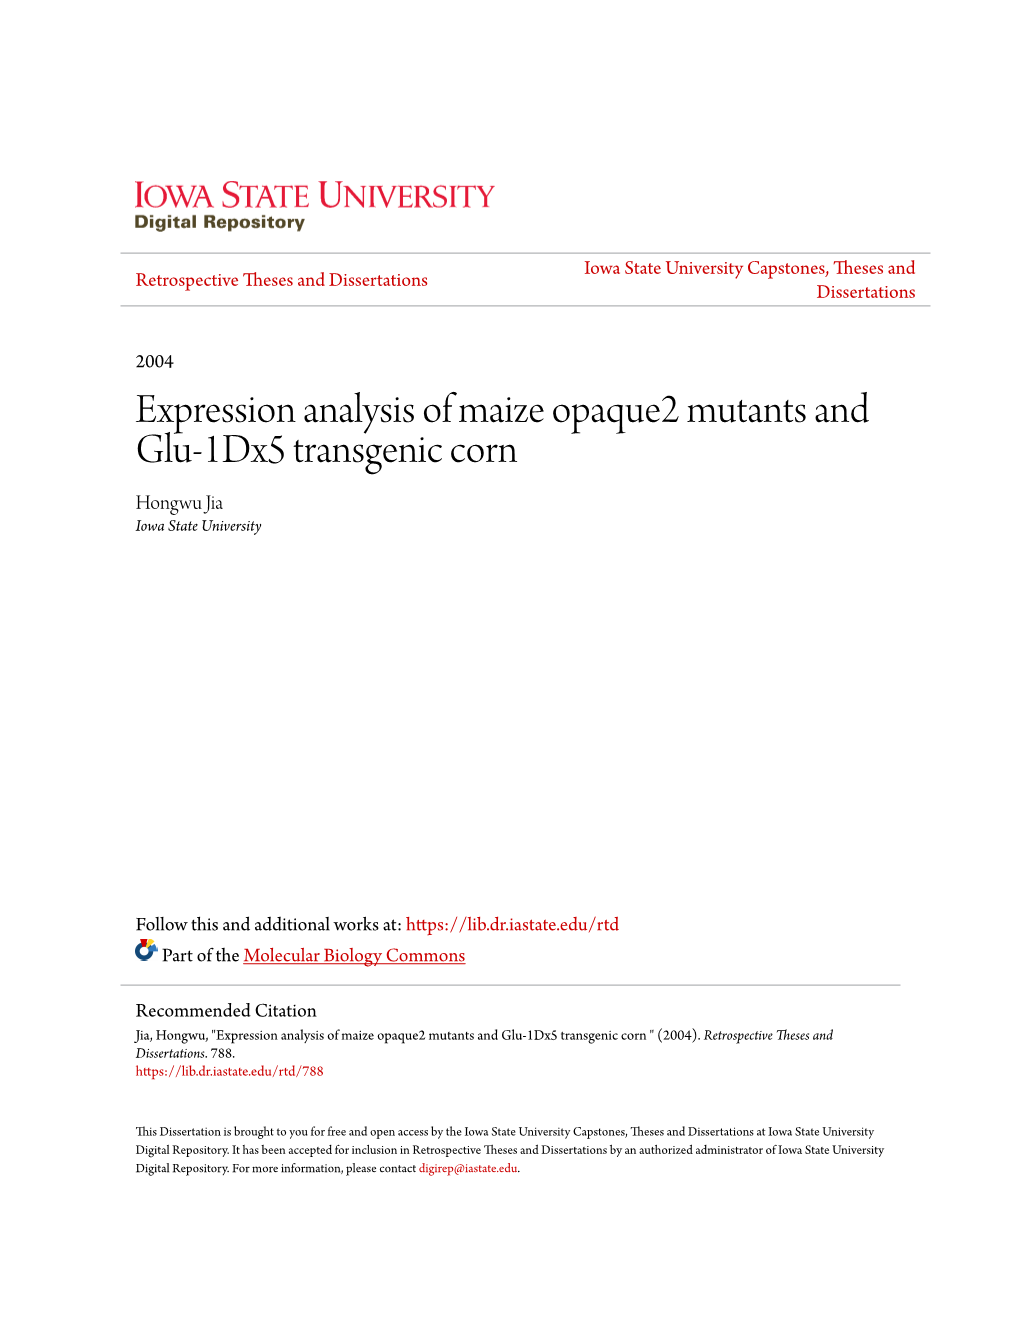 Expression Analysis of Maize Opaque2 Mutants and Glu-1Dx5 Transgenic Corn Hongwu Jia Iowa State University